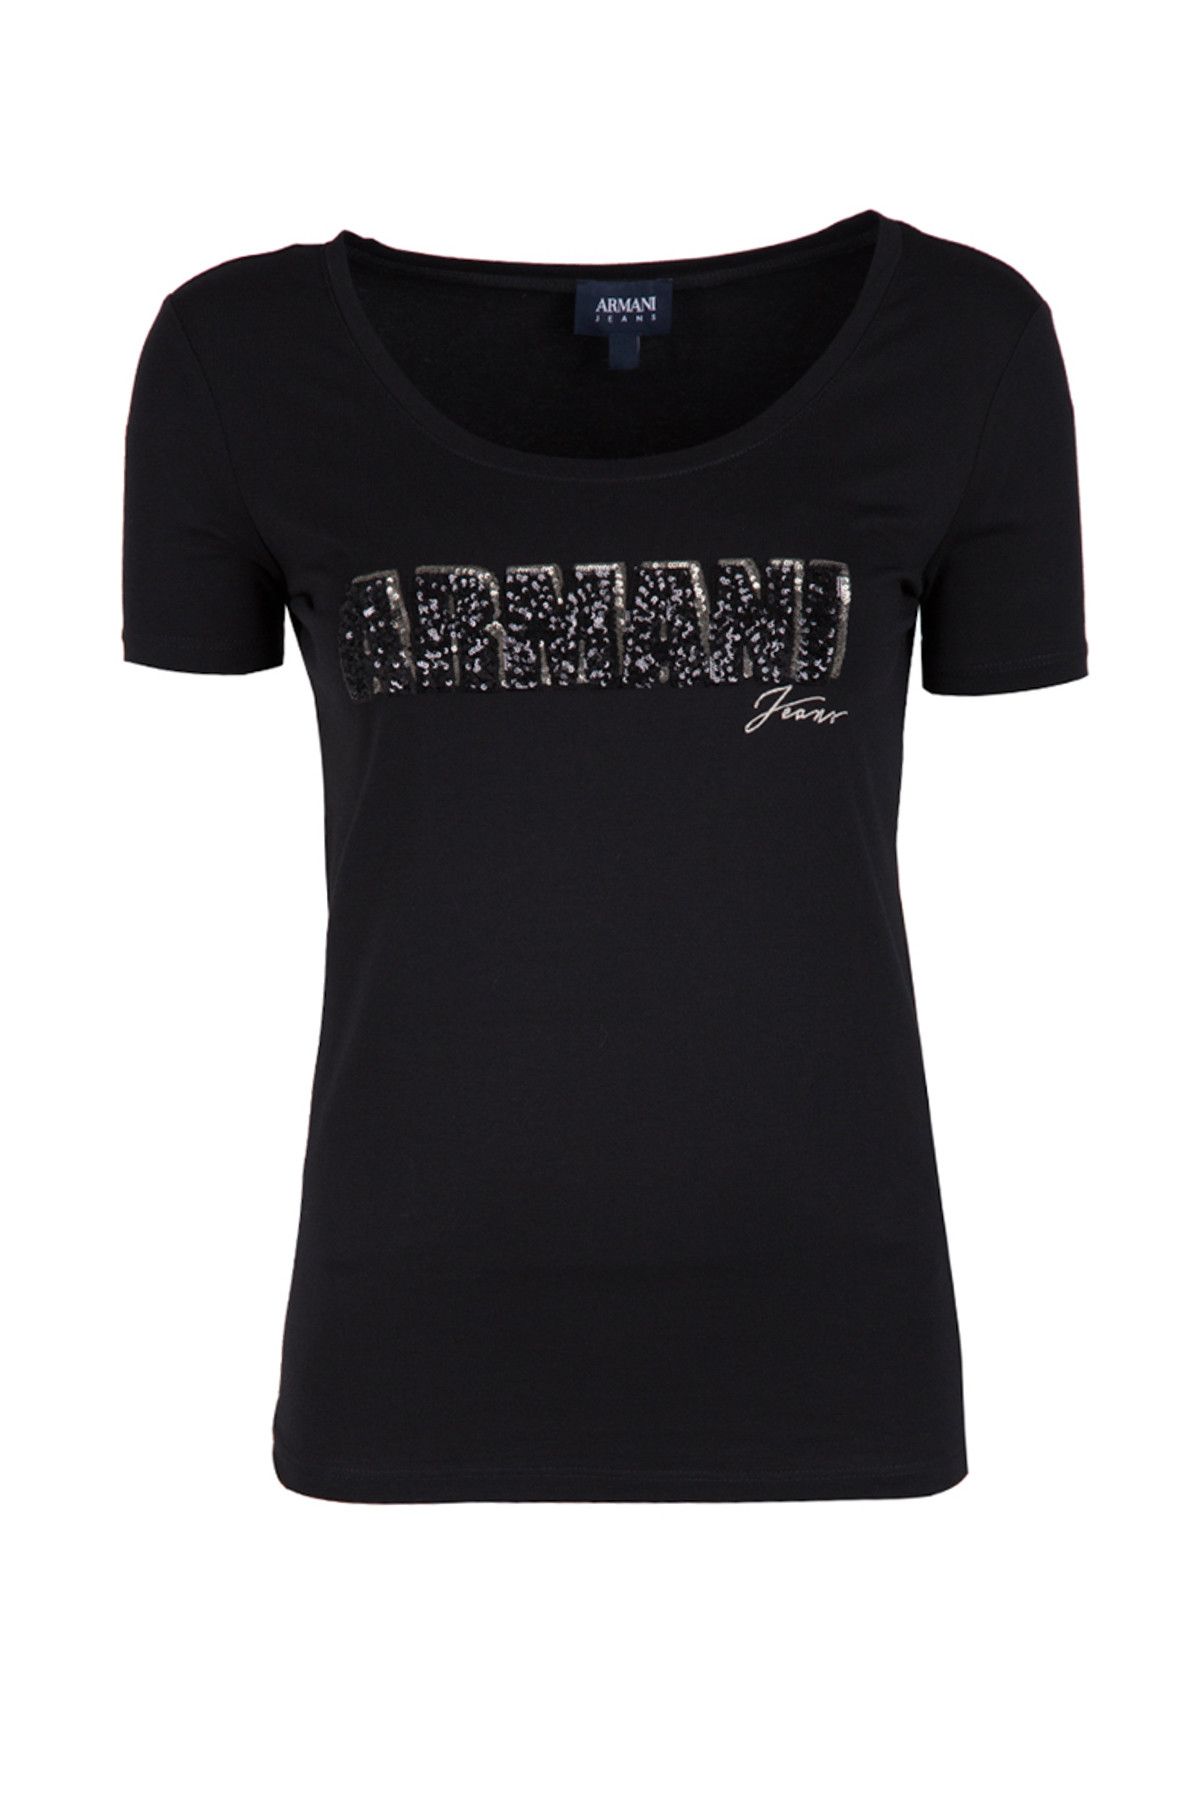 Armani Jeans Siyah Kadın T-Shirt 6Y5T10 5Jabz 1200